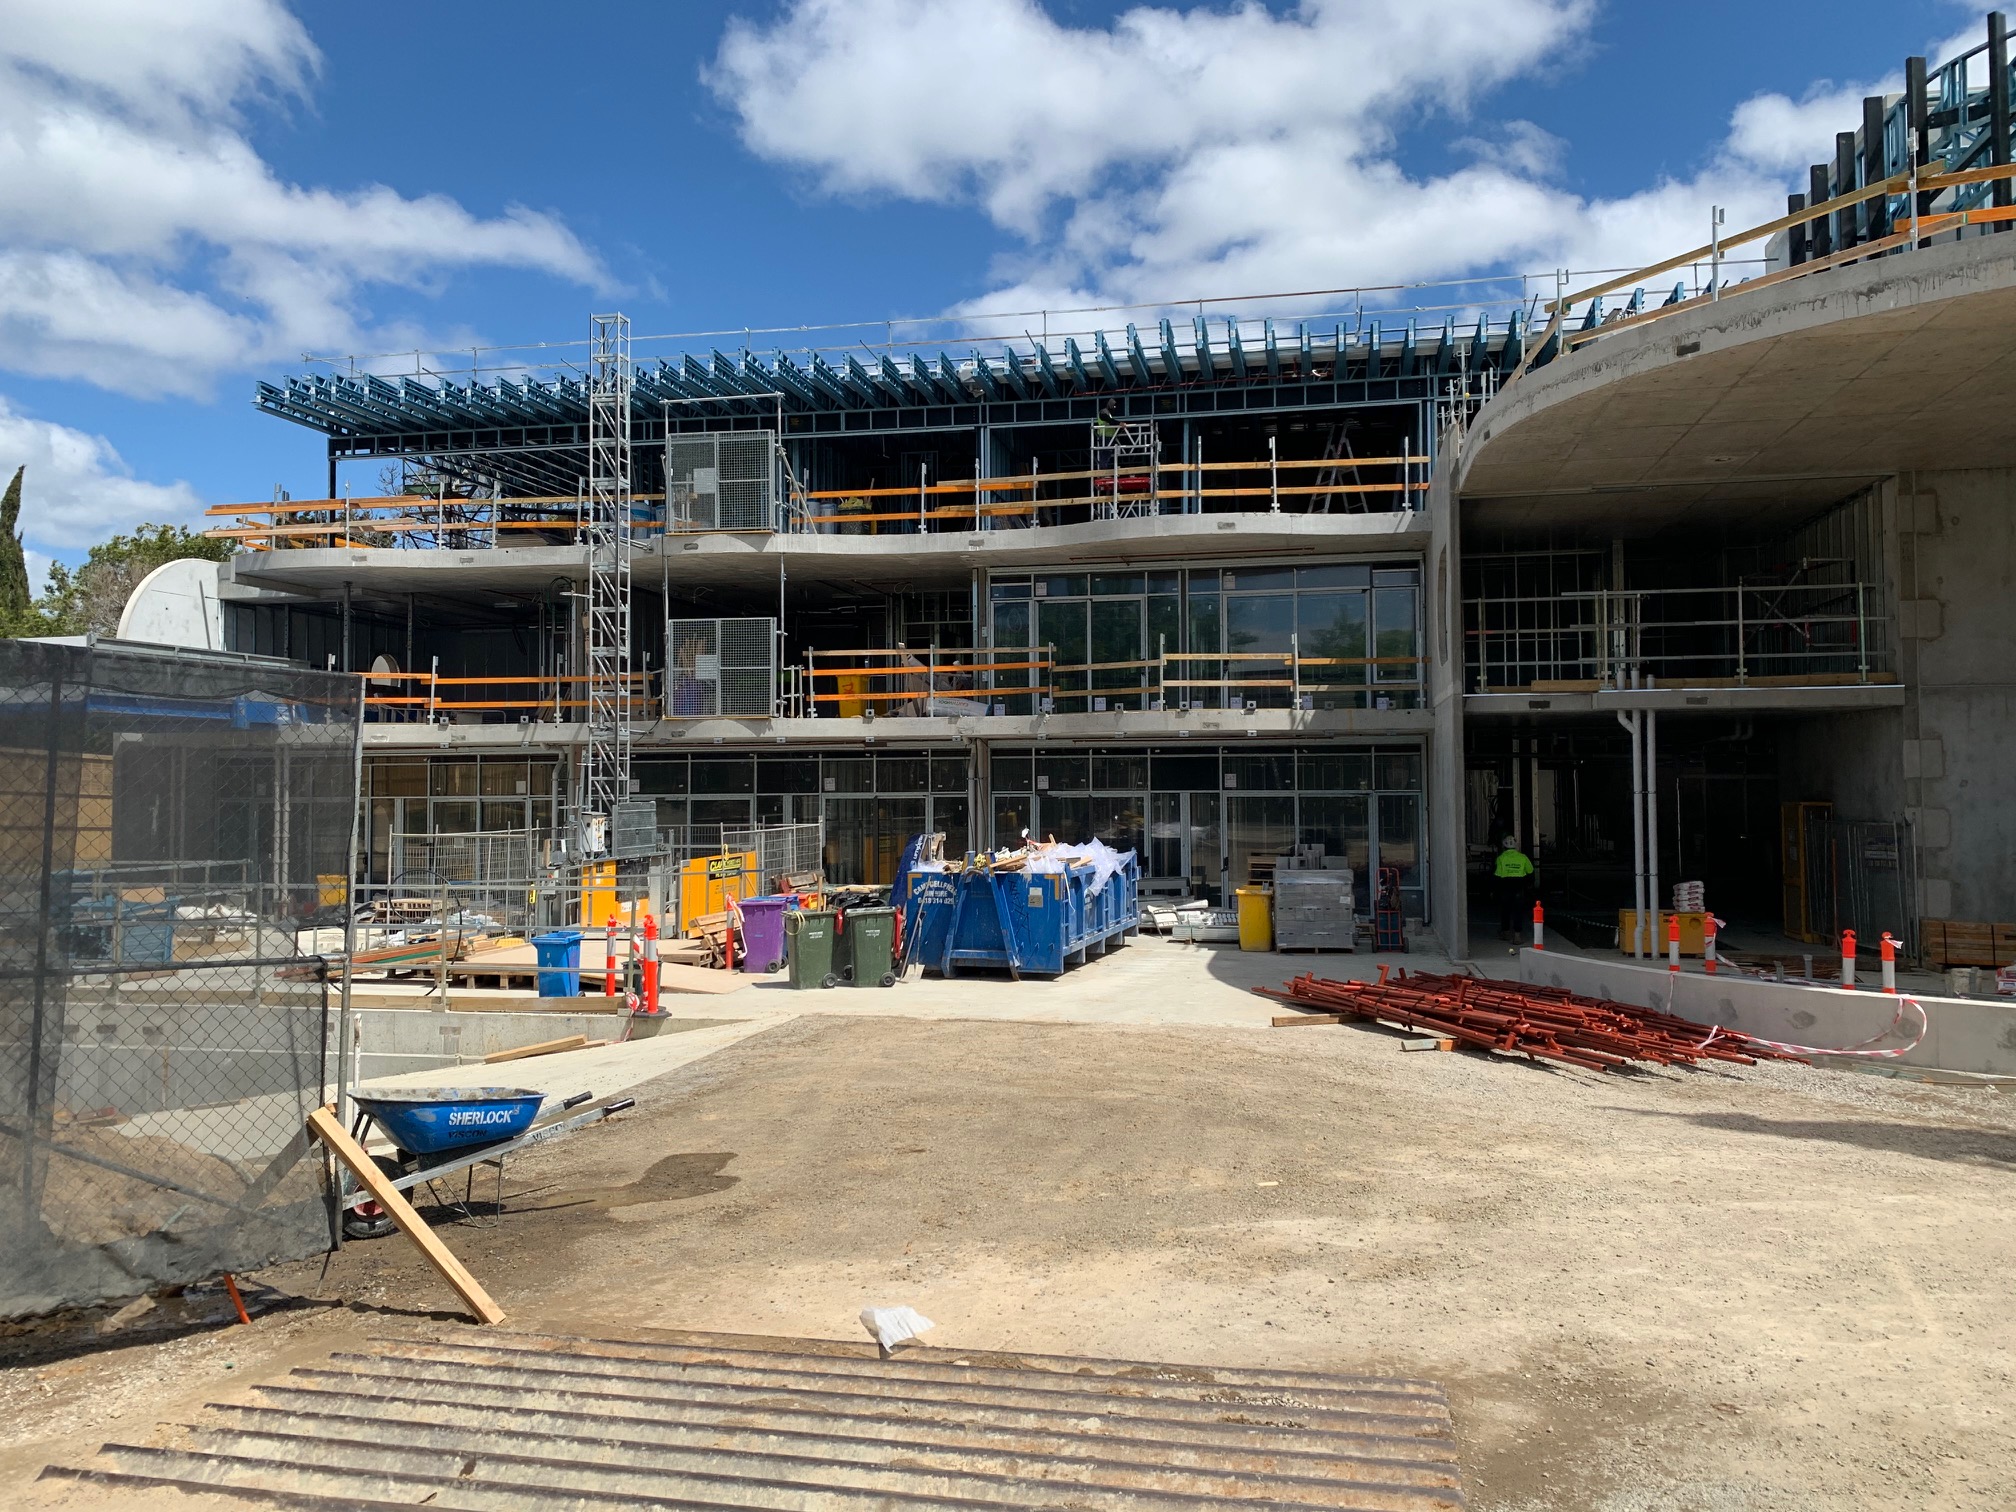 Morgan Glen Iris – update from our Elizabeth Street construction site